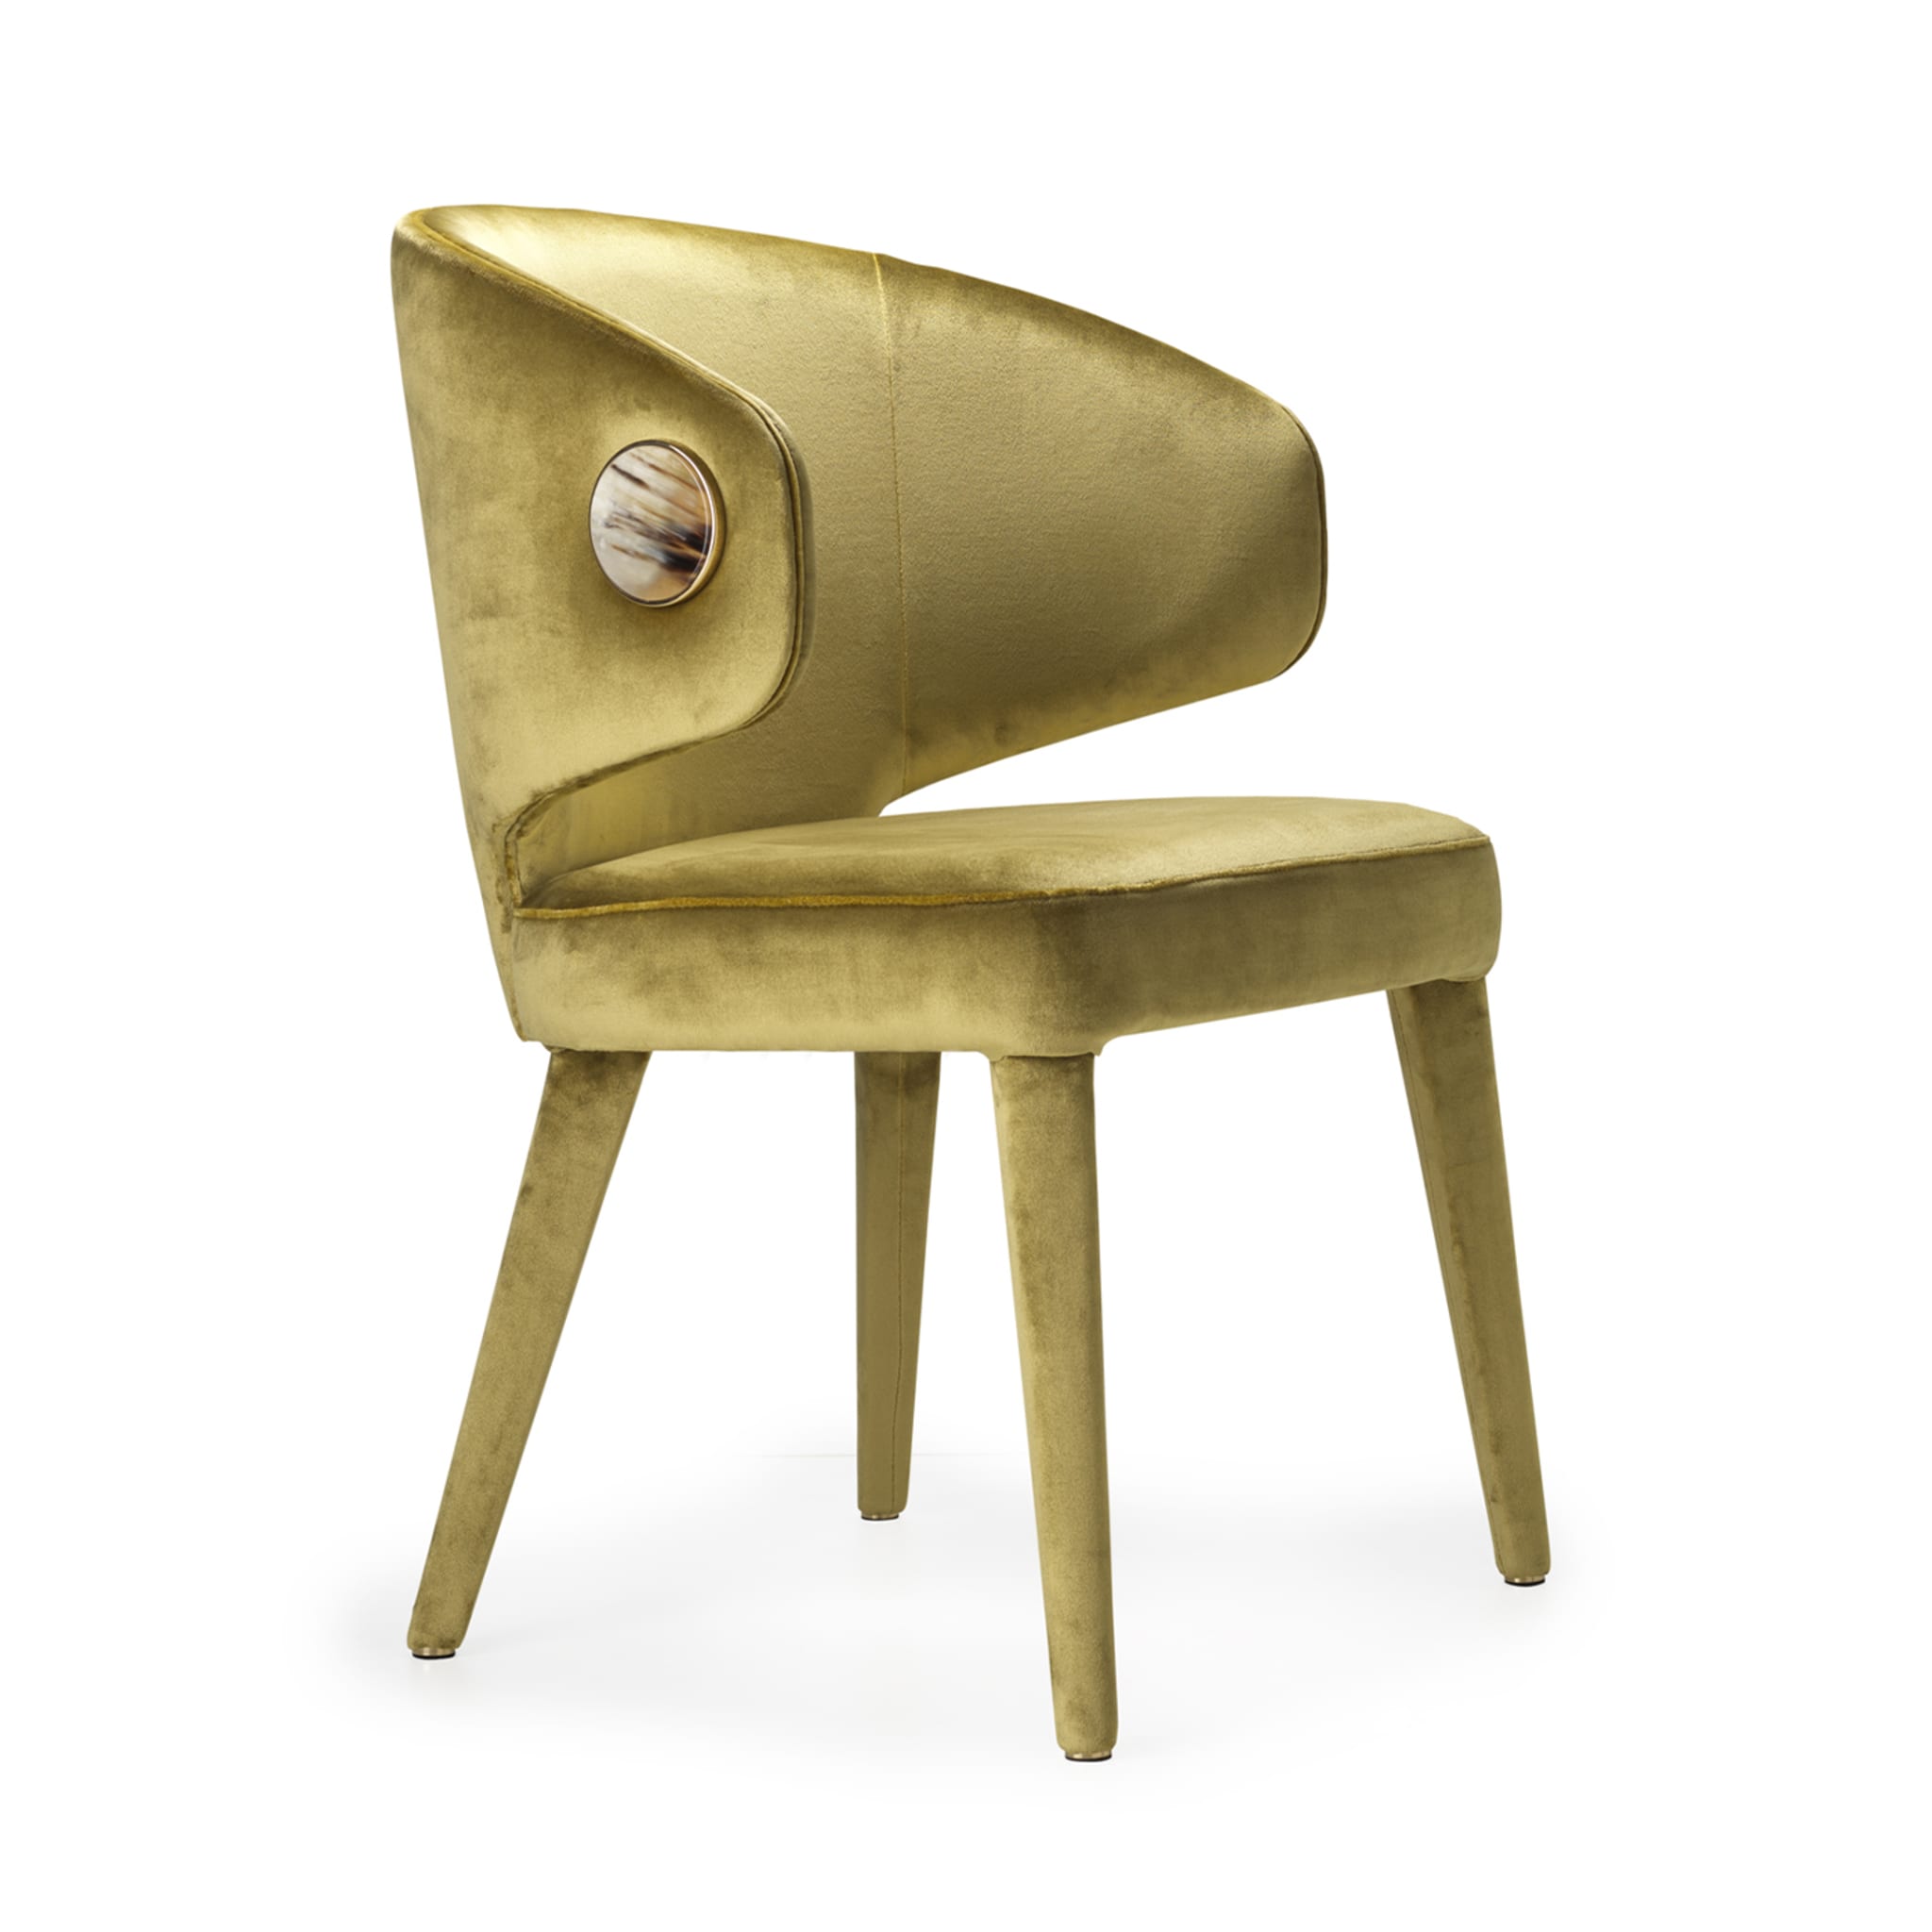 CIRCE gold chair - Alternative view 1